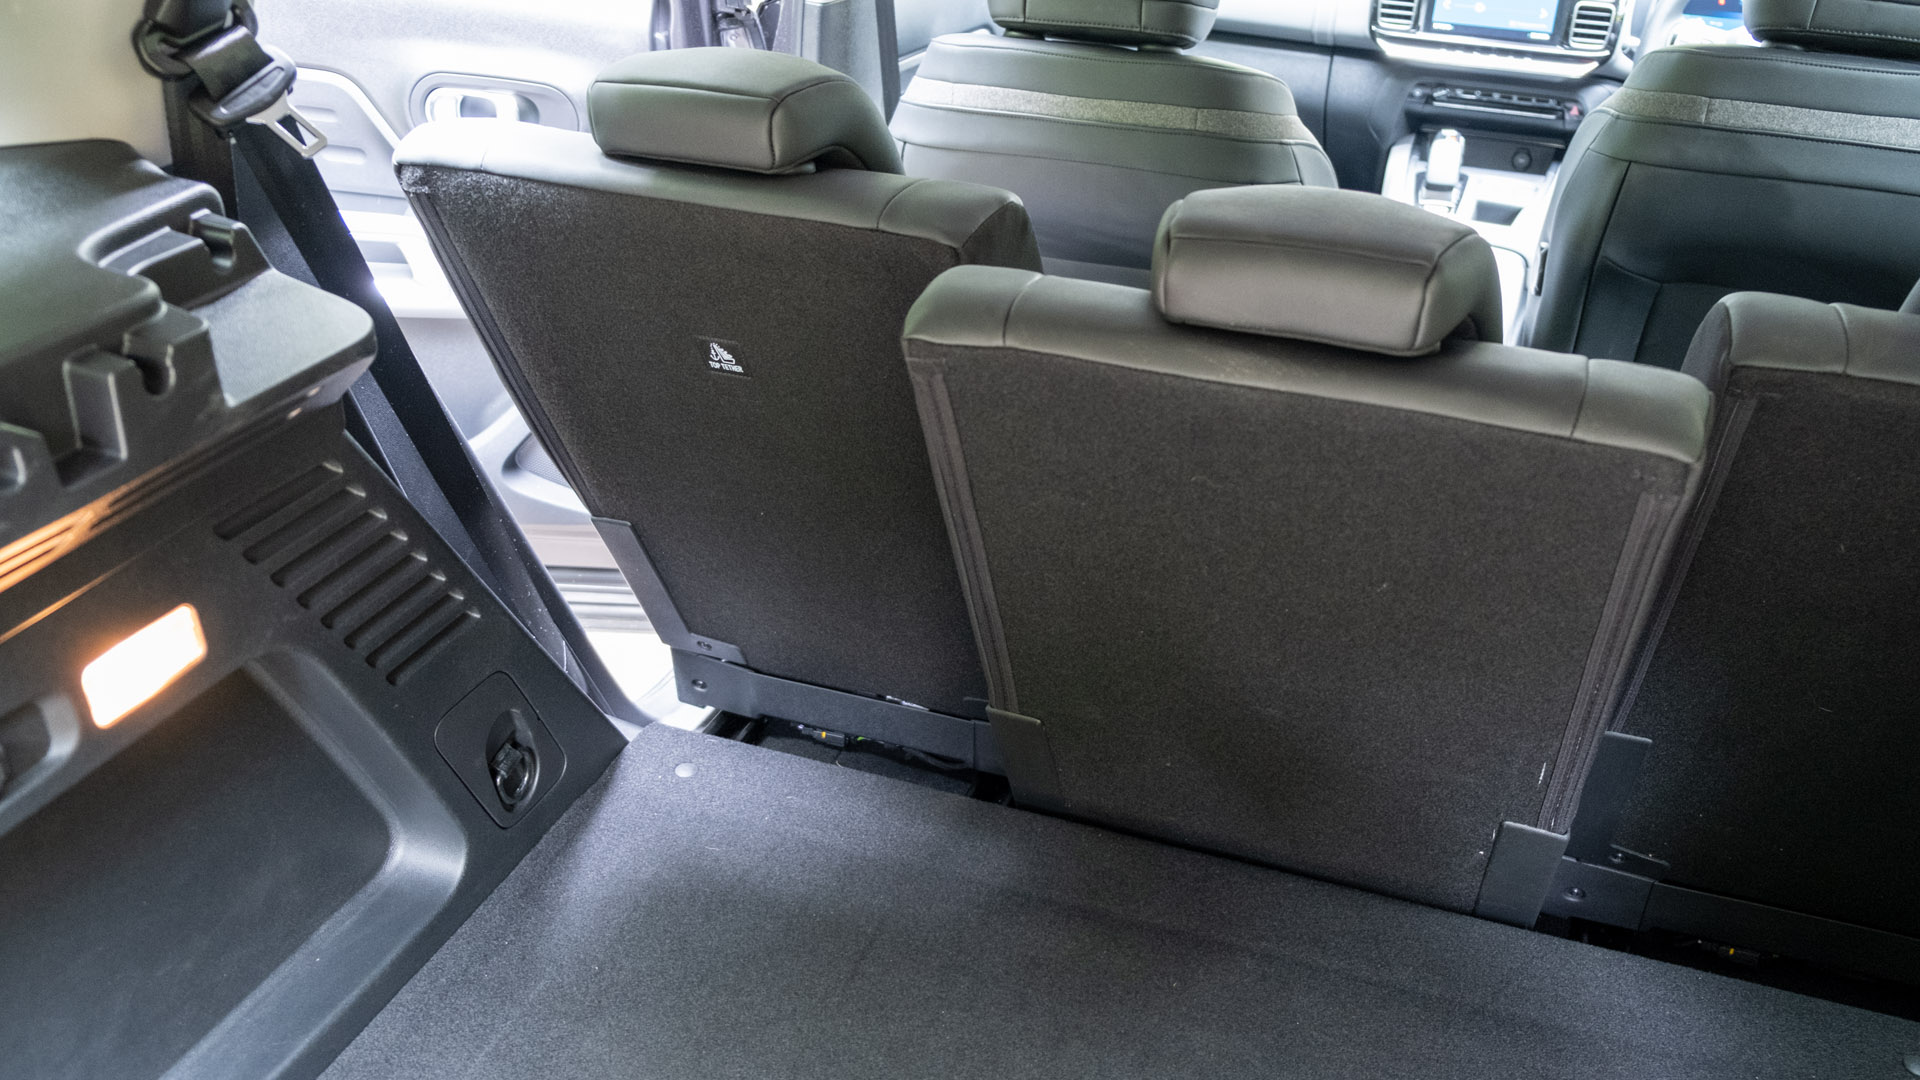 Citroen C5 Aircross Hybrid rear seat space